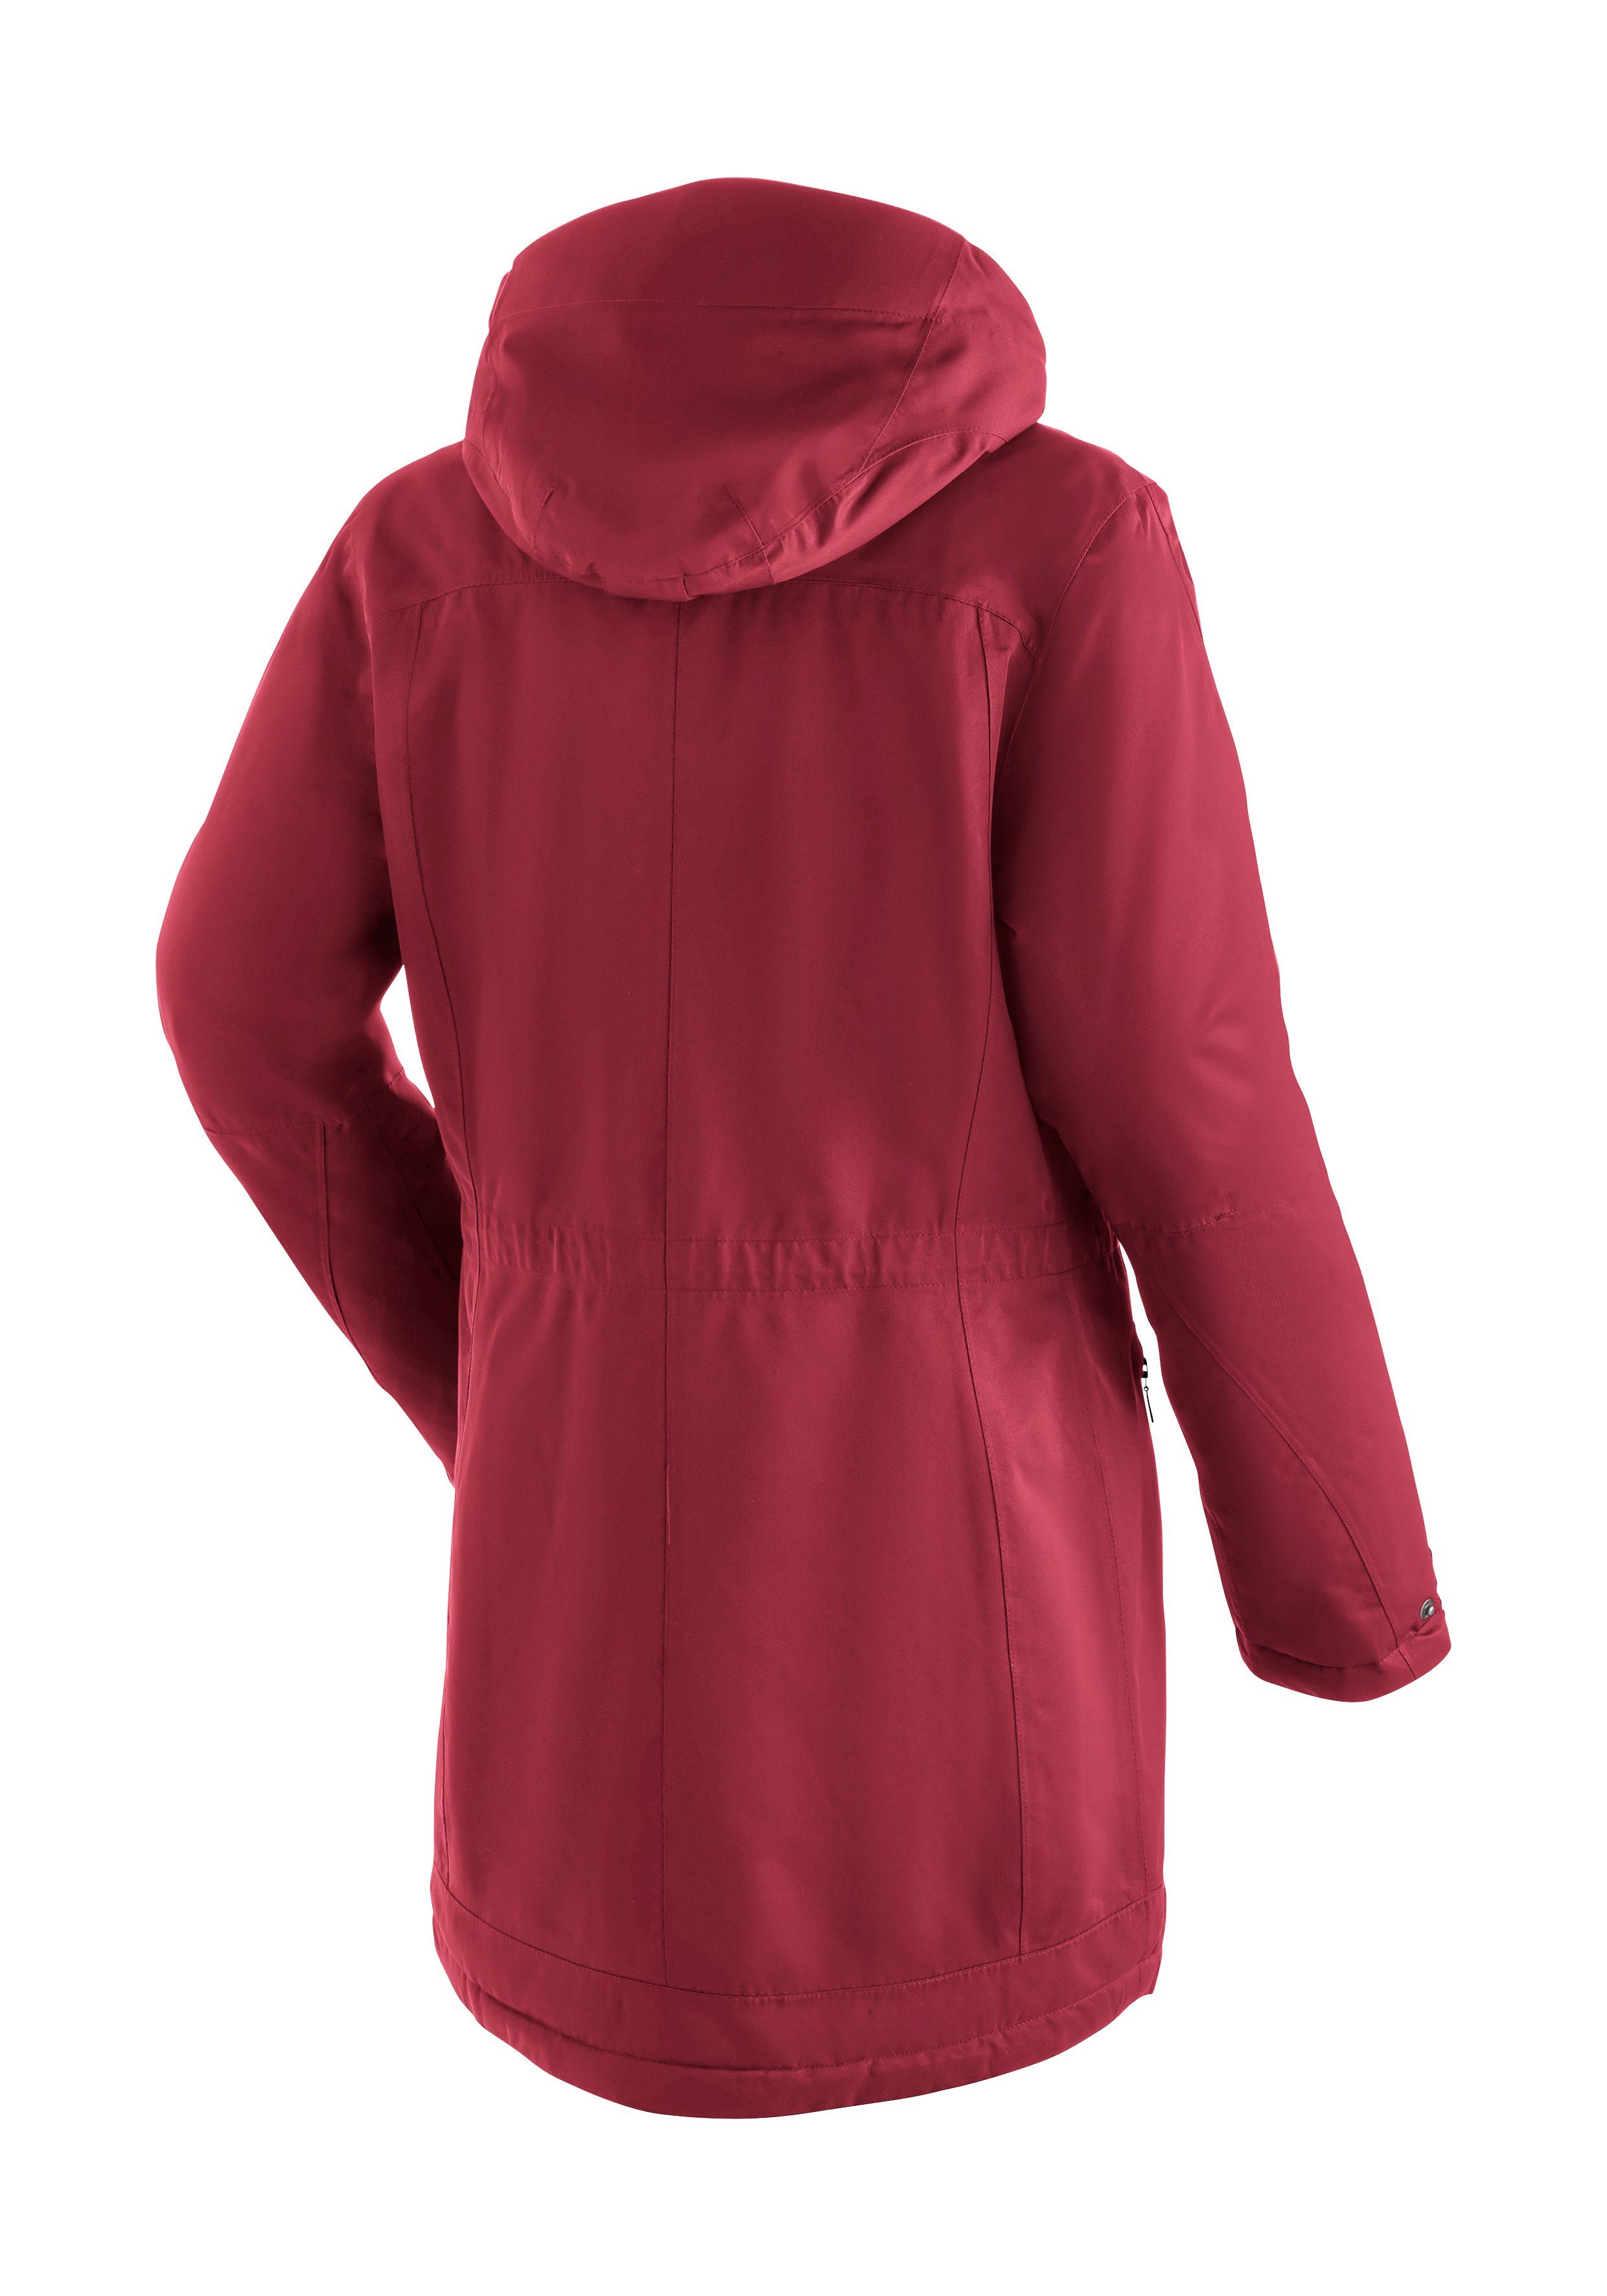 Maier Sports Funktionsjacke Lisa 2 Wetterschutz mit bordeaux vollem Outdoor-Mantel